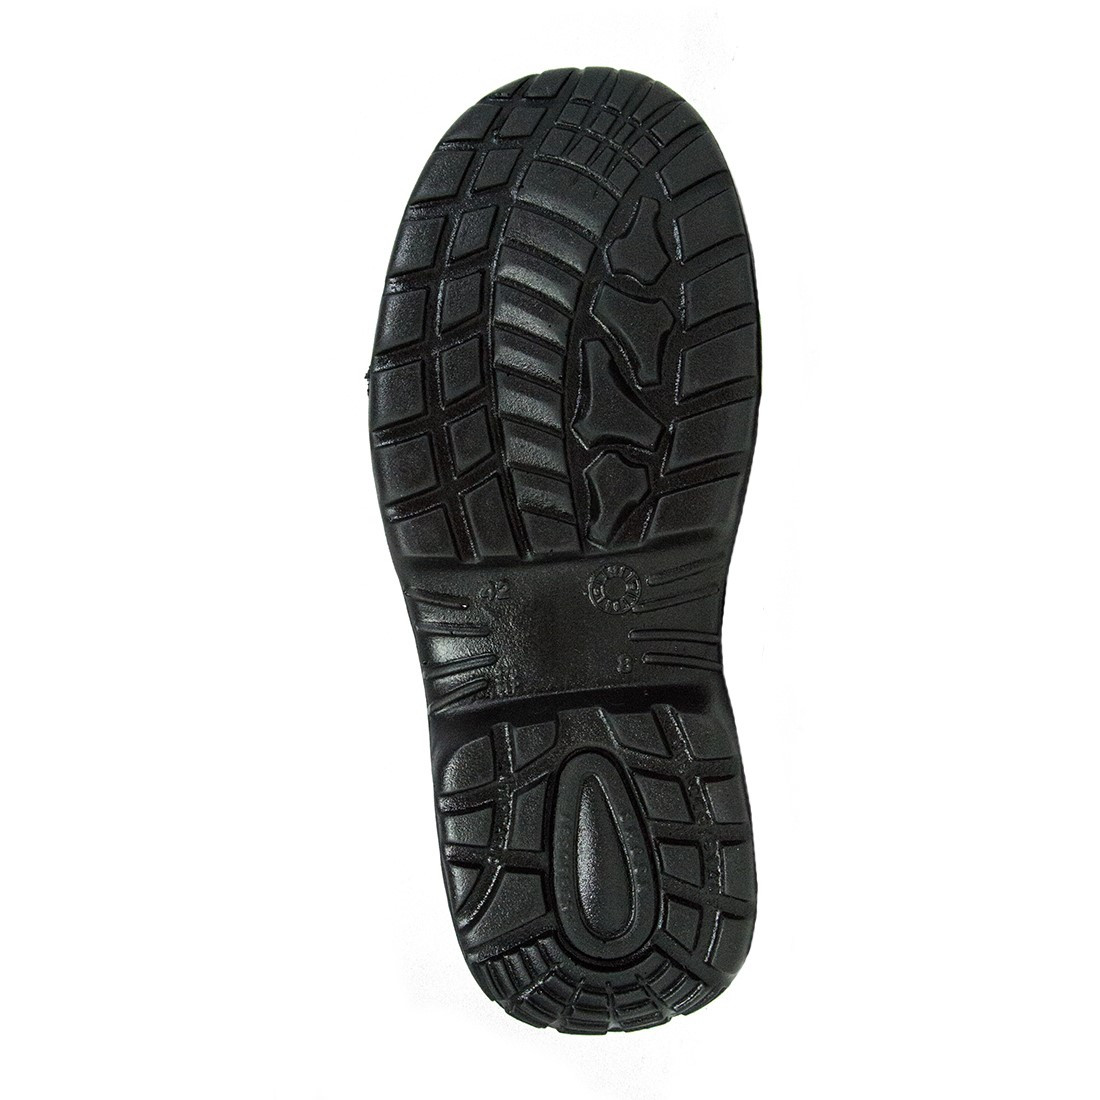 Victoria Boot S1P SRC - Footwear